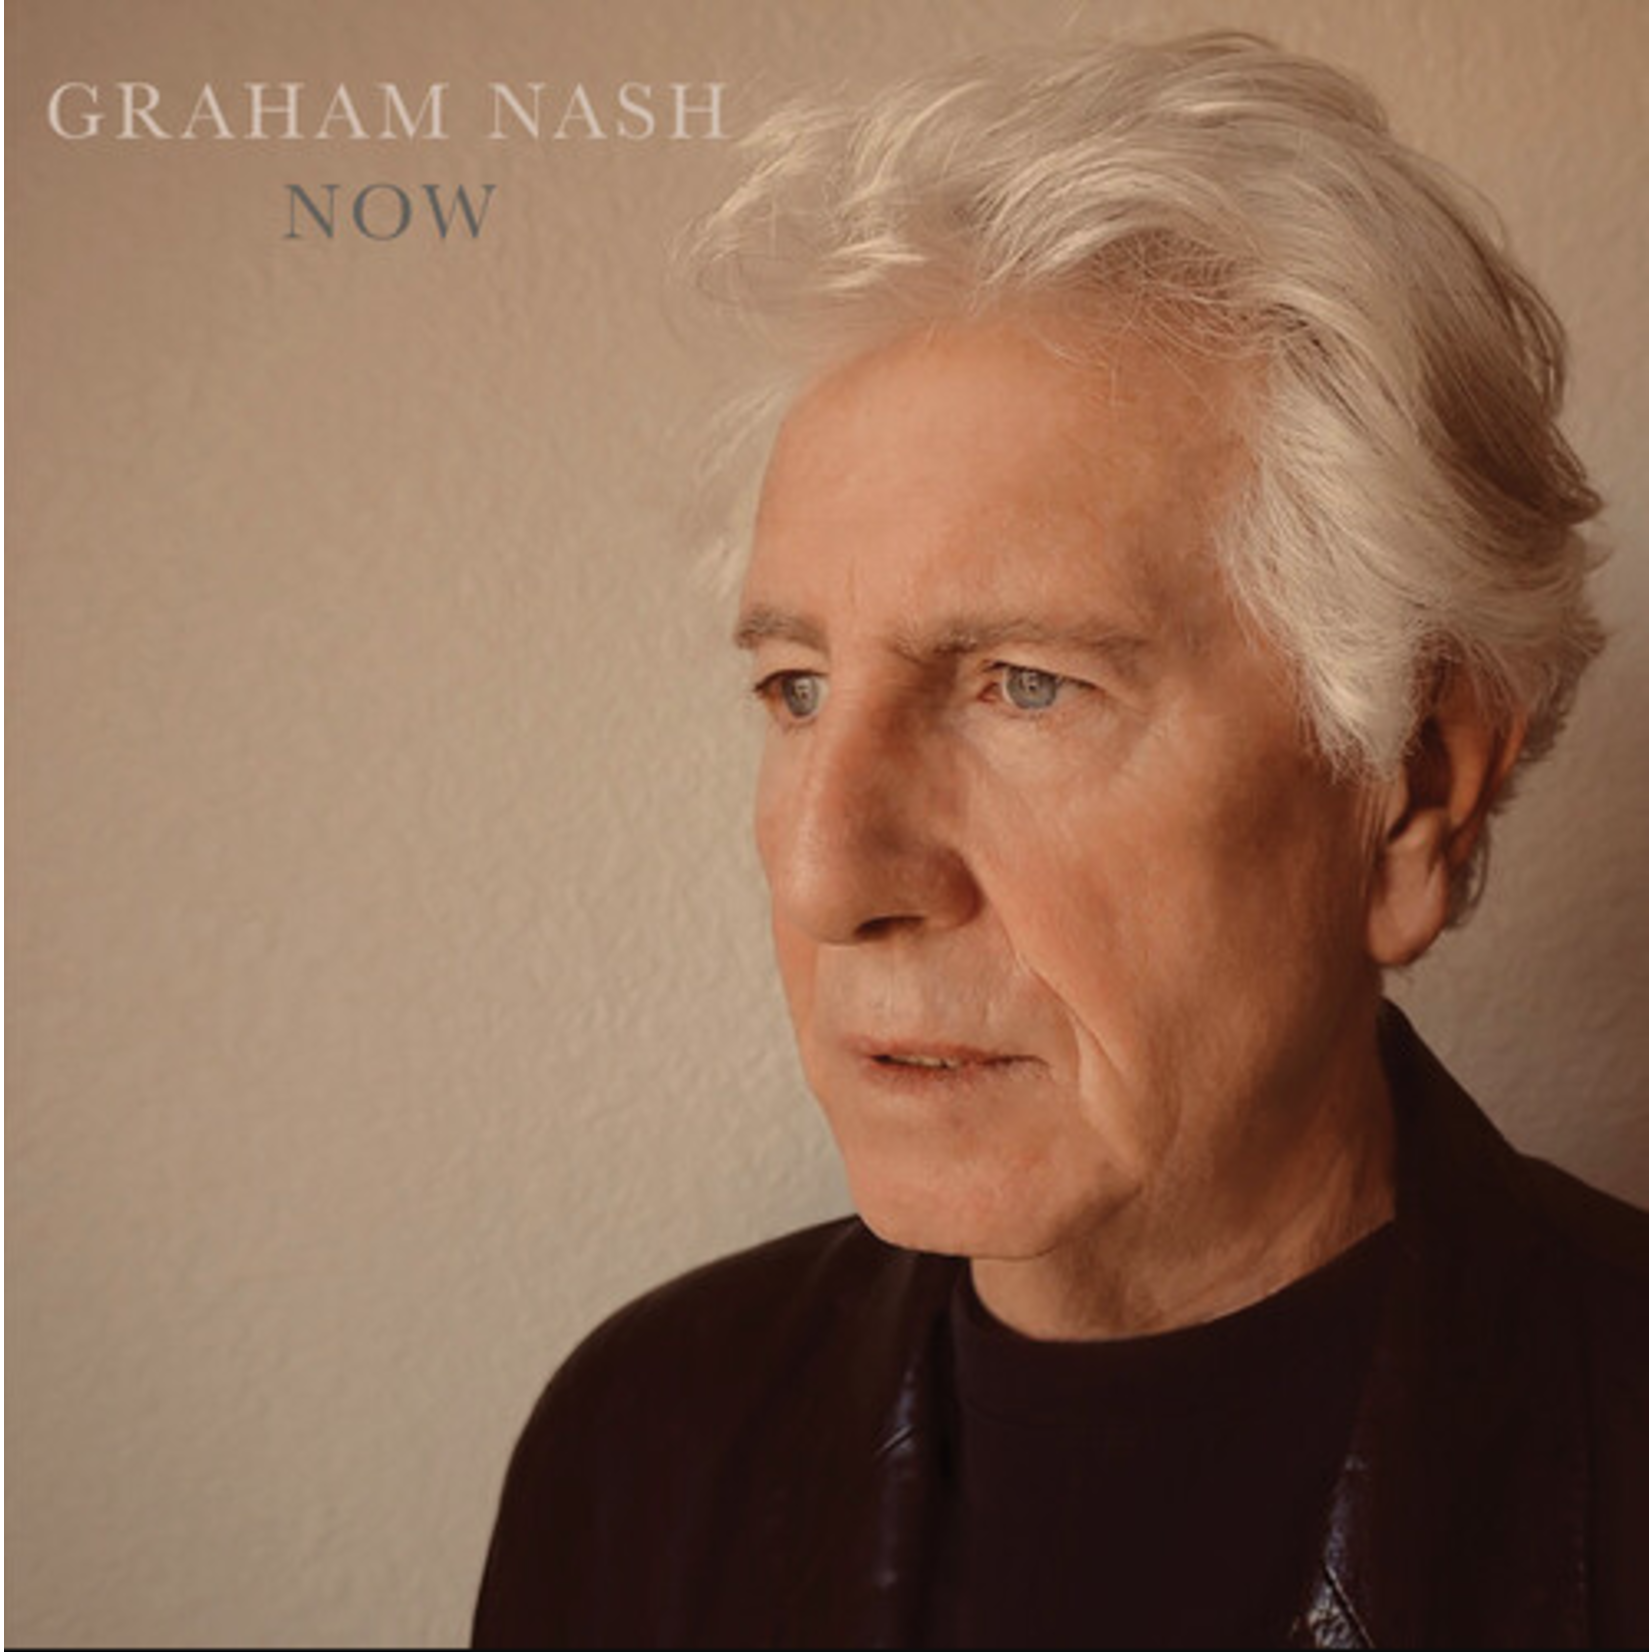 BMG Graham Nash - Now (CD)